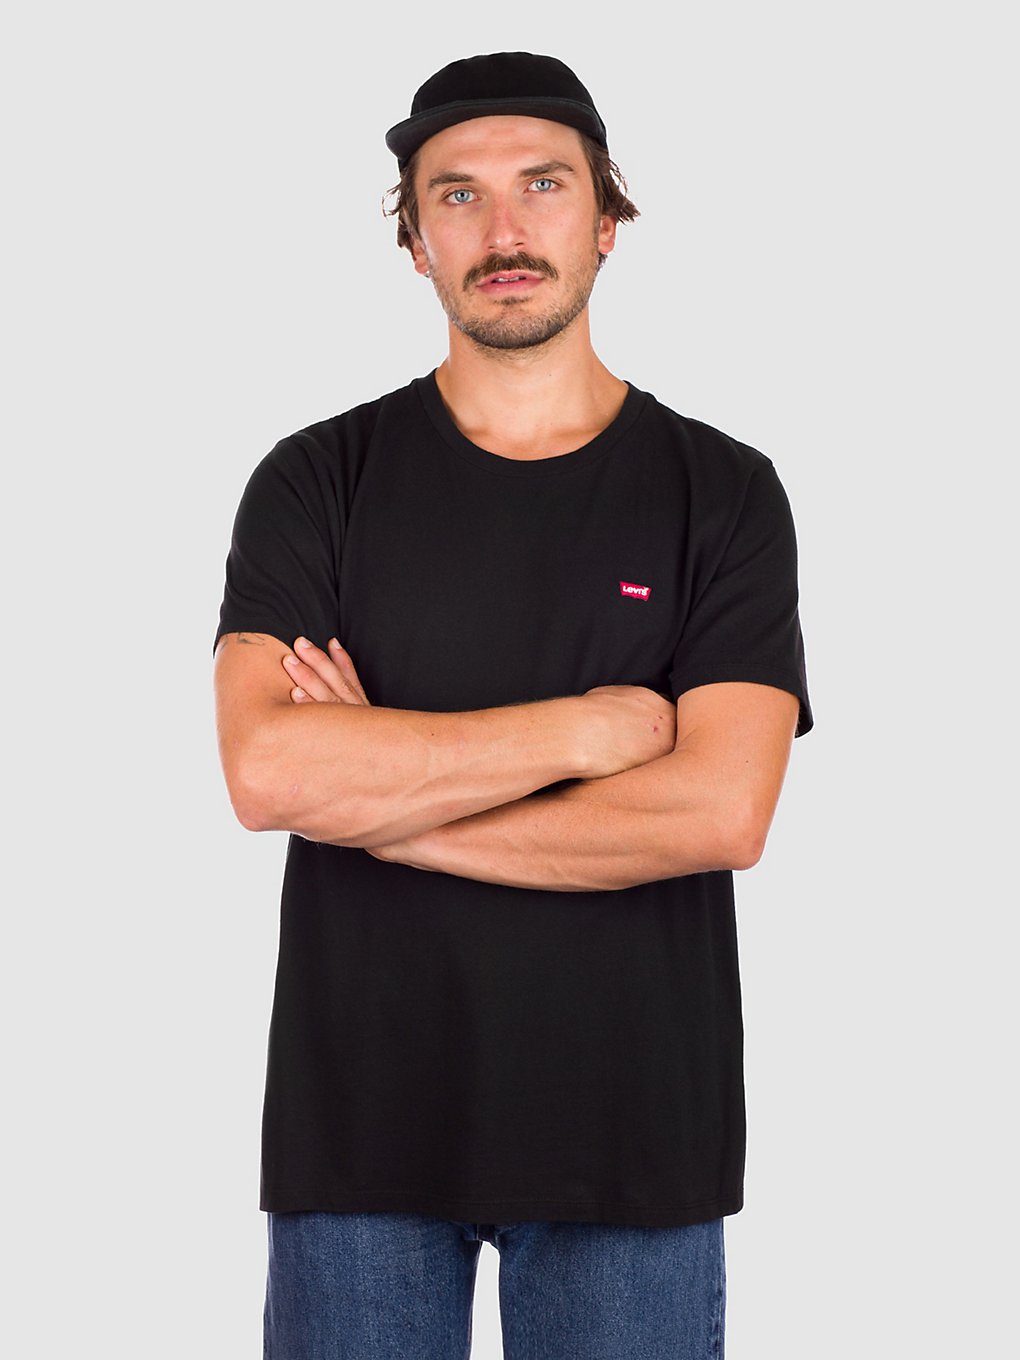 Levi's Original Hm T-Shirt mineral black kaufen